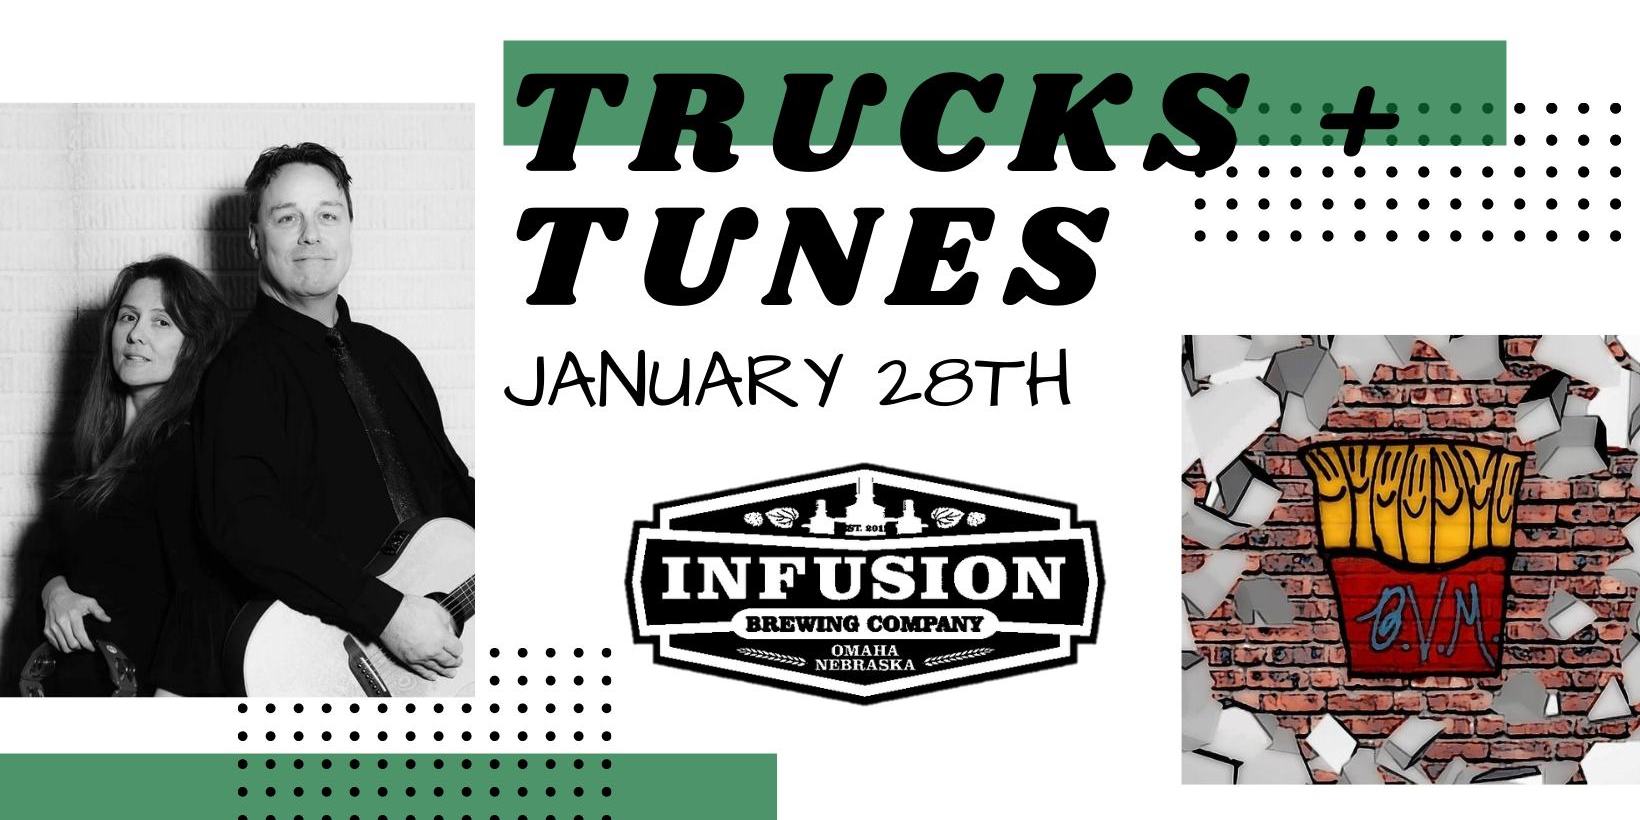 Trucks + Tunes promotional image